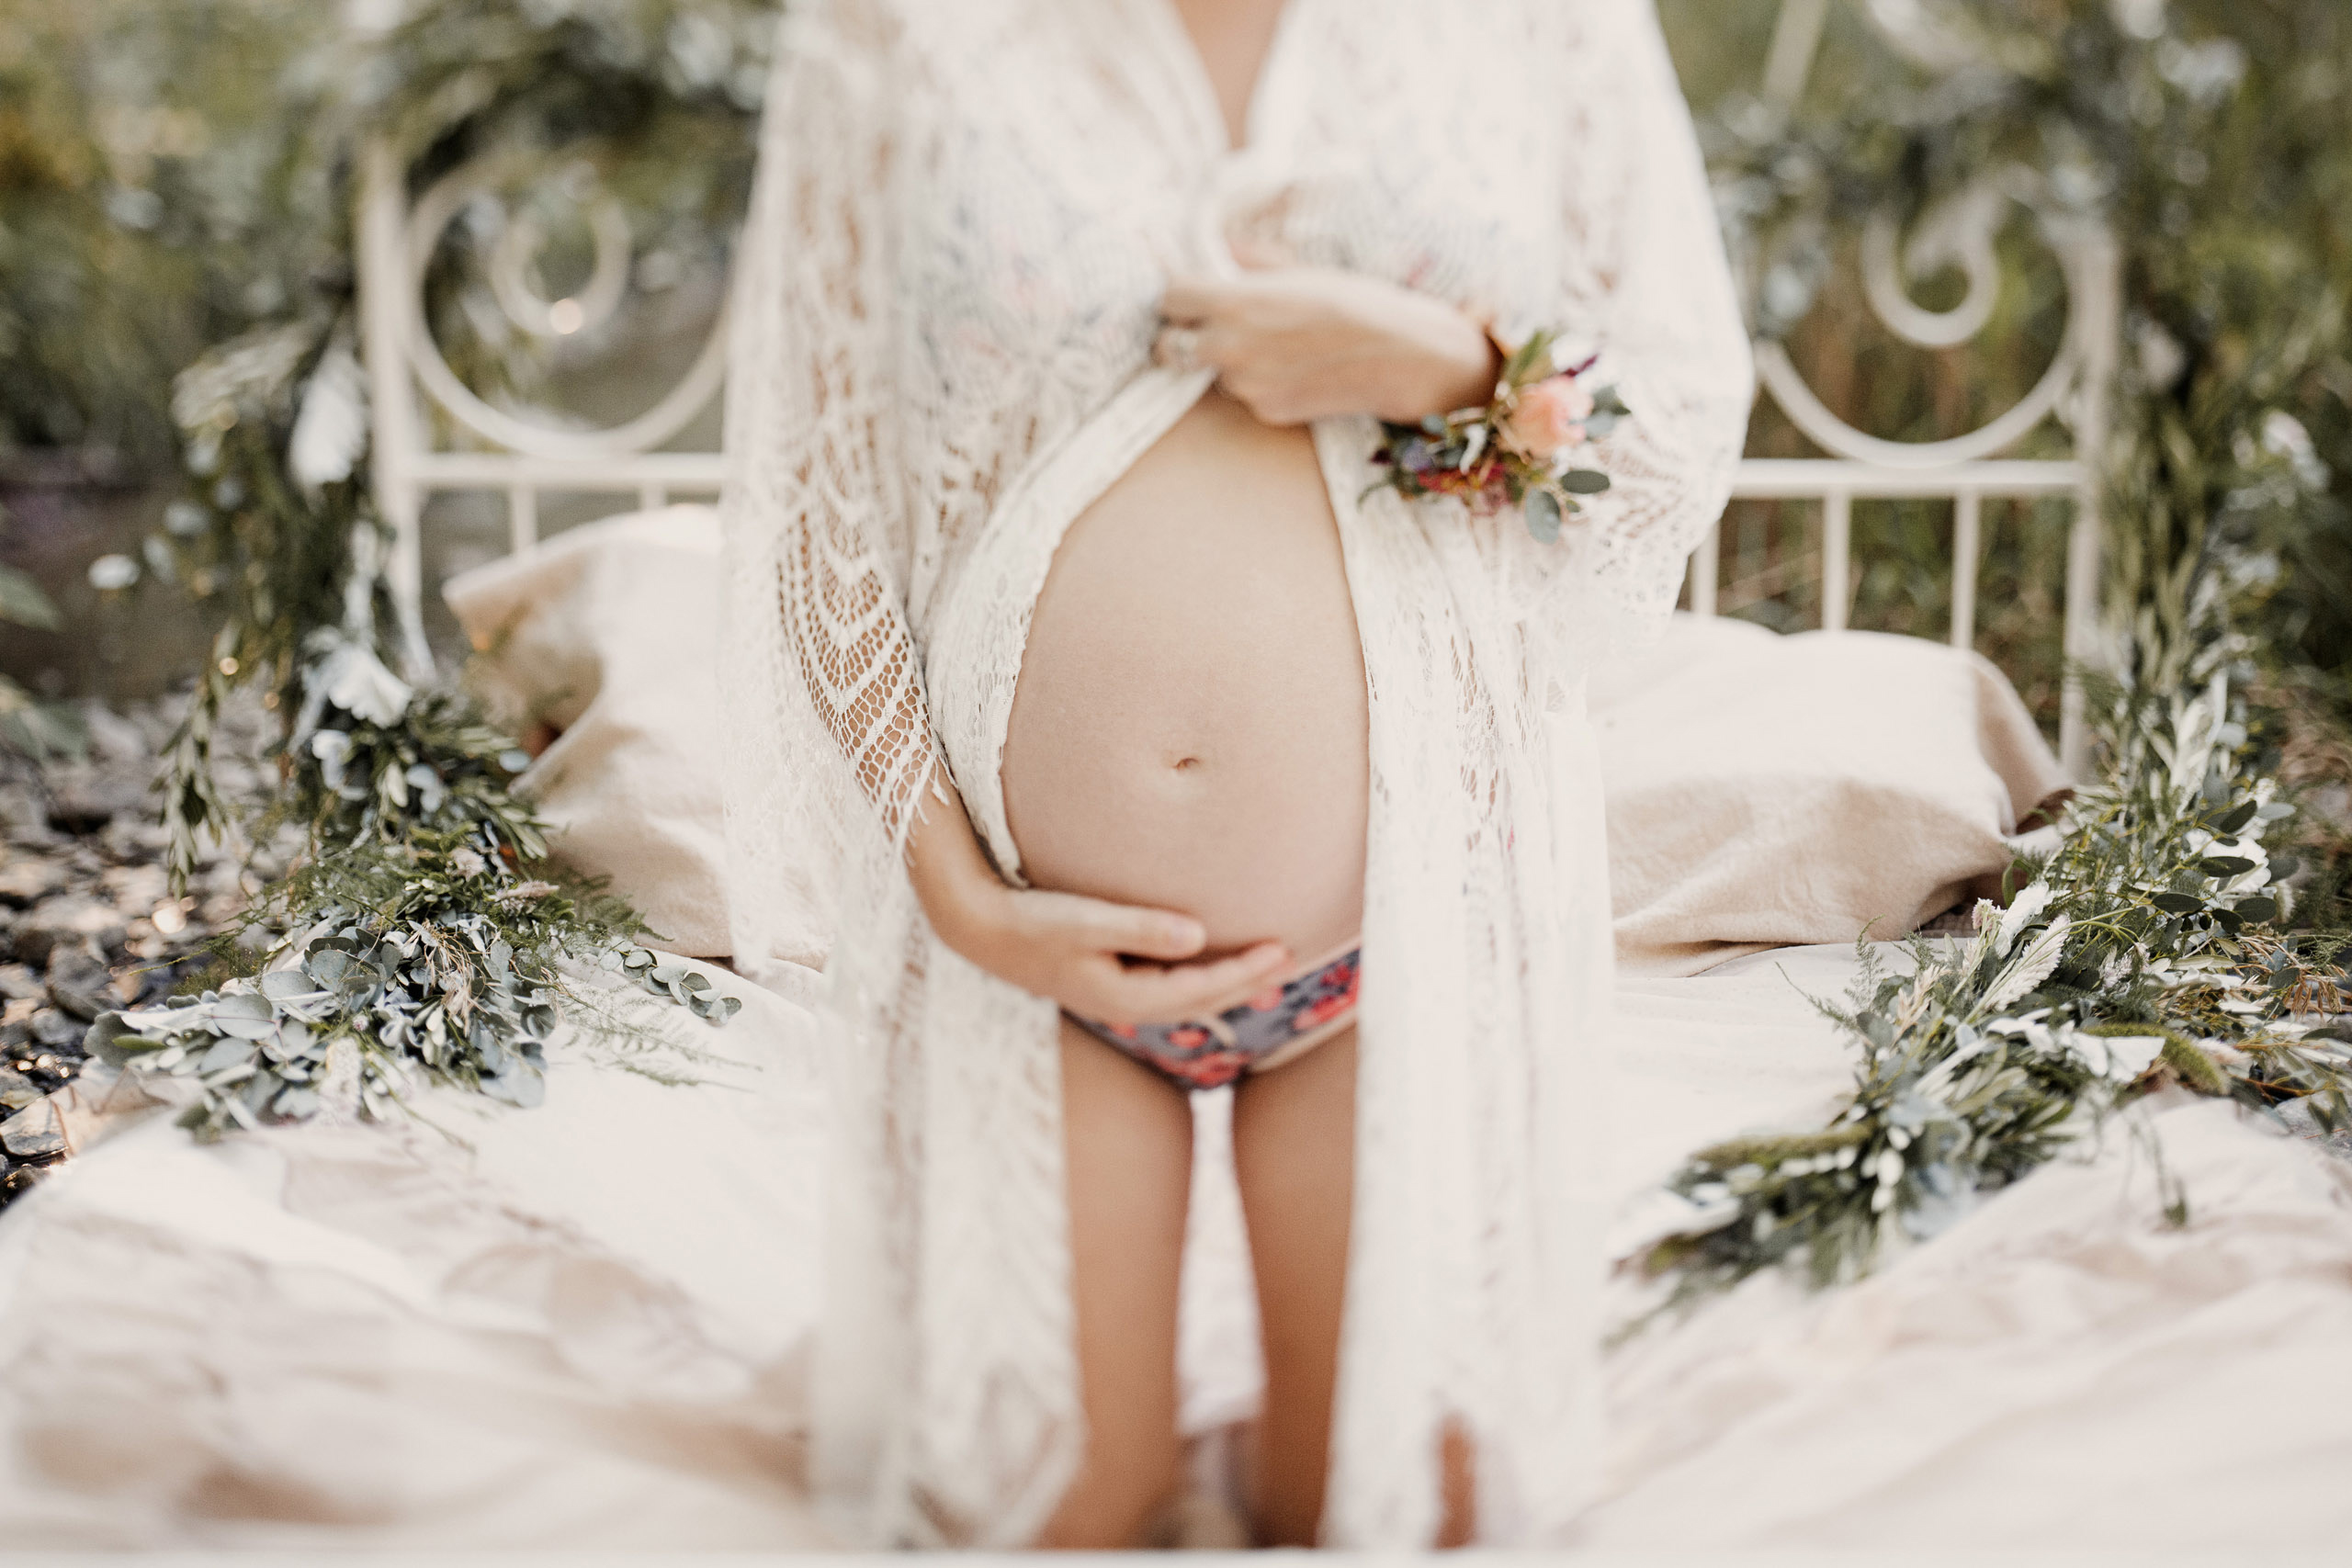 niagara maternity boudoir photography